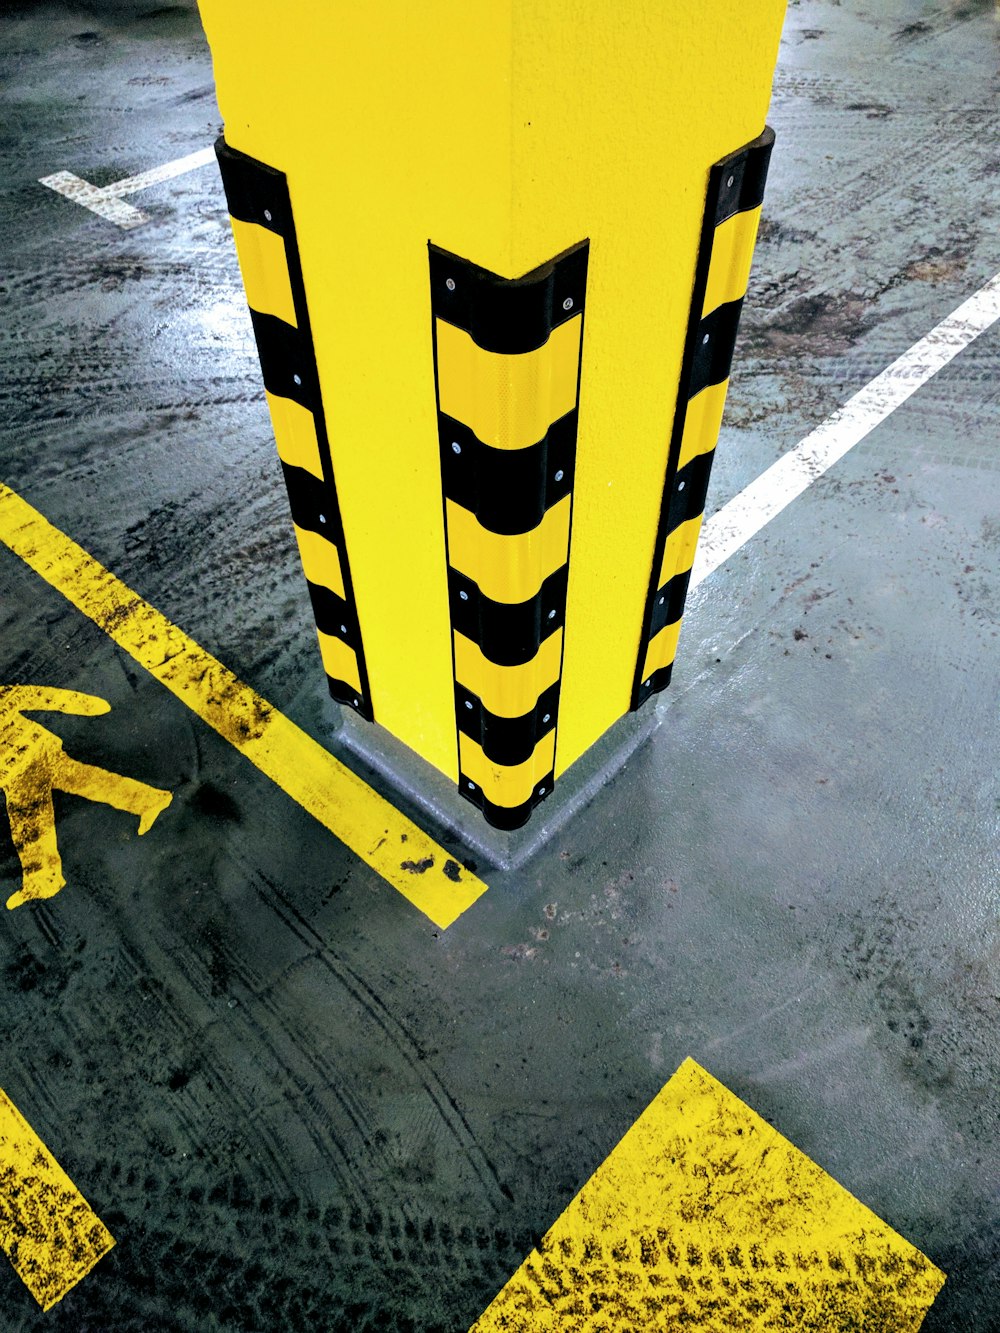 yellow and black pedestrian lane